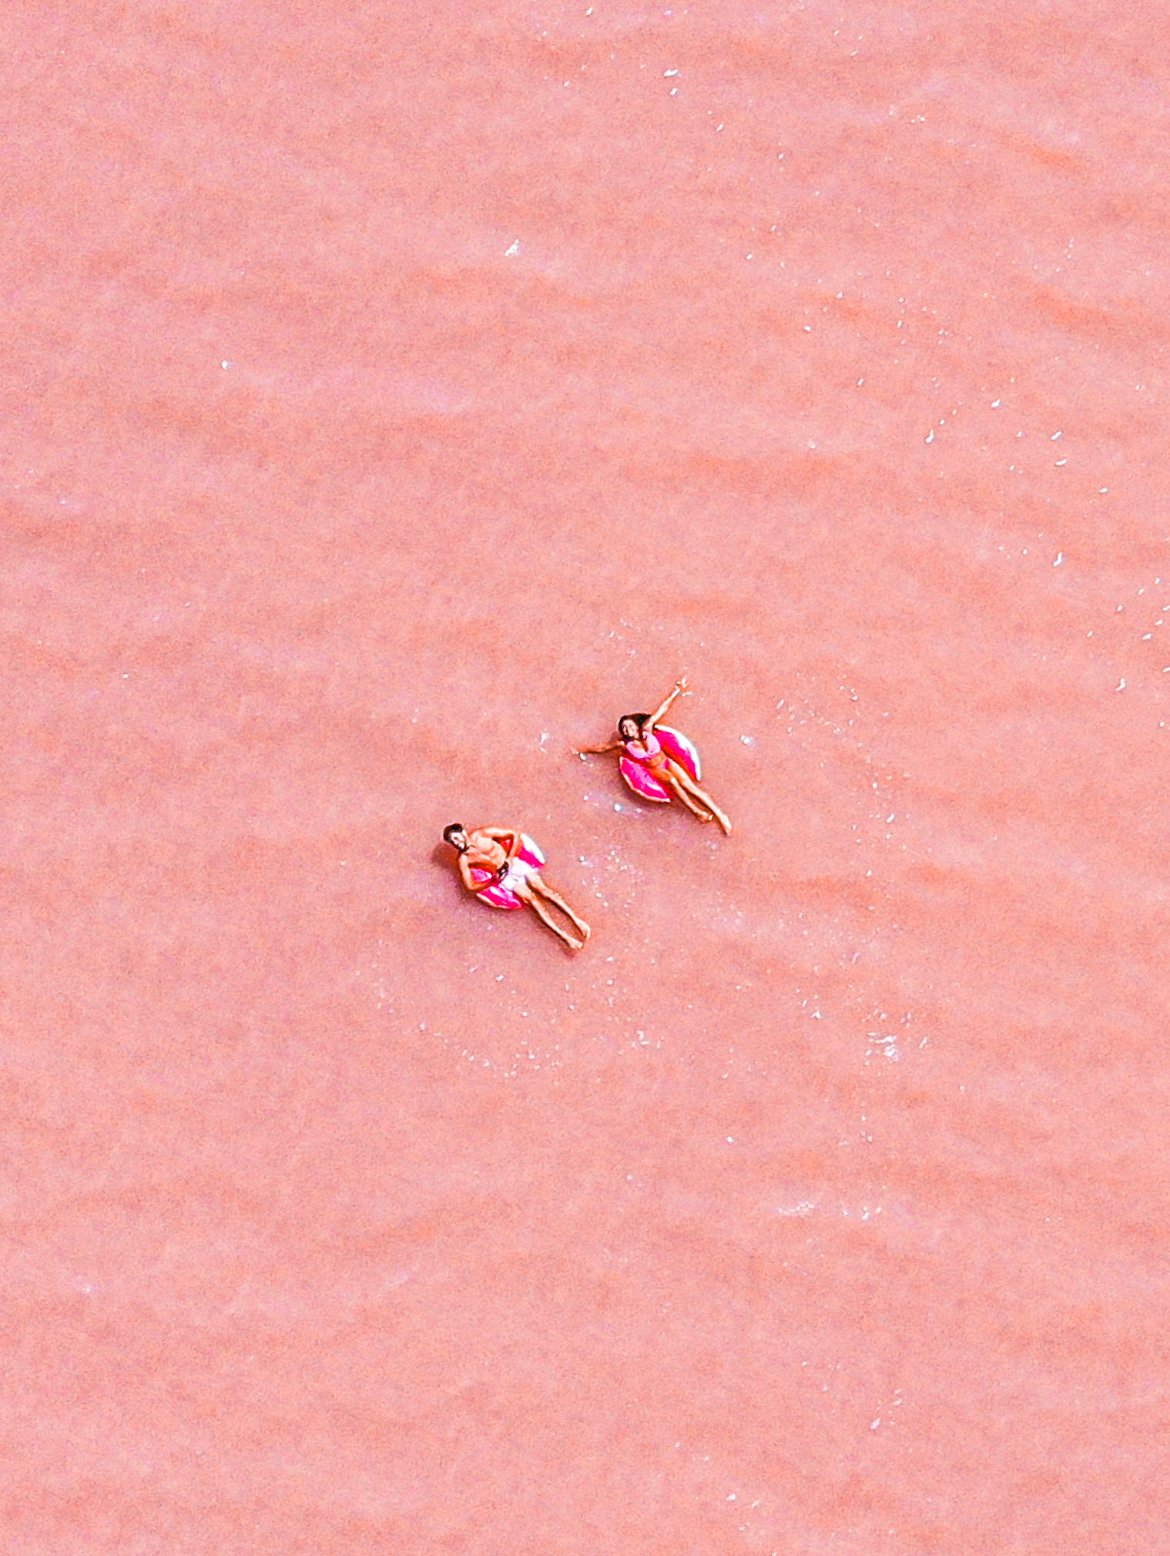 bucket list item- swim in a pink lake